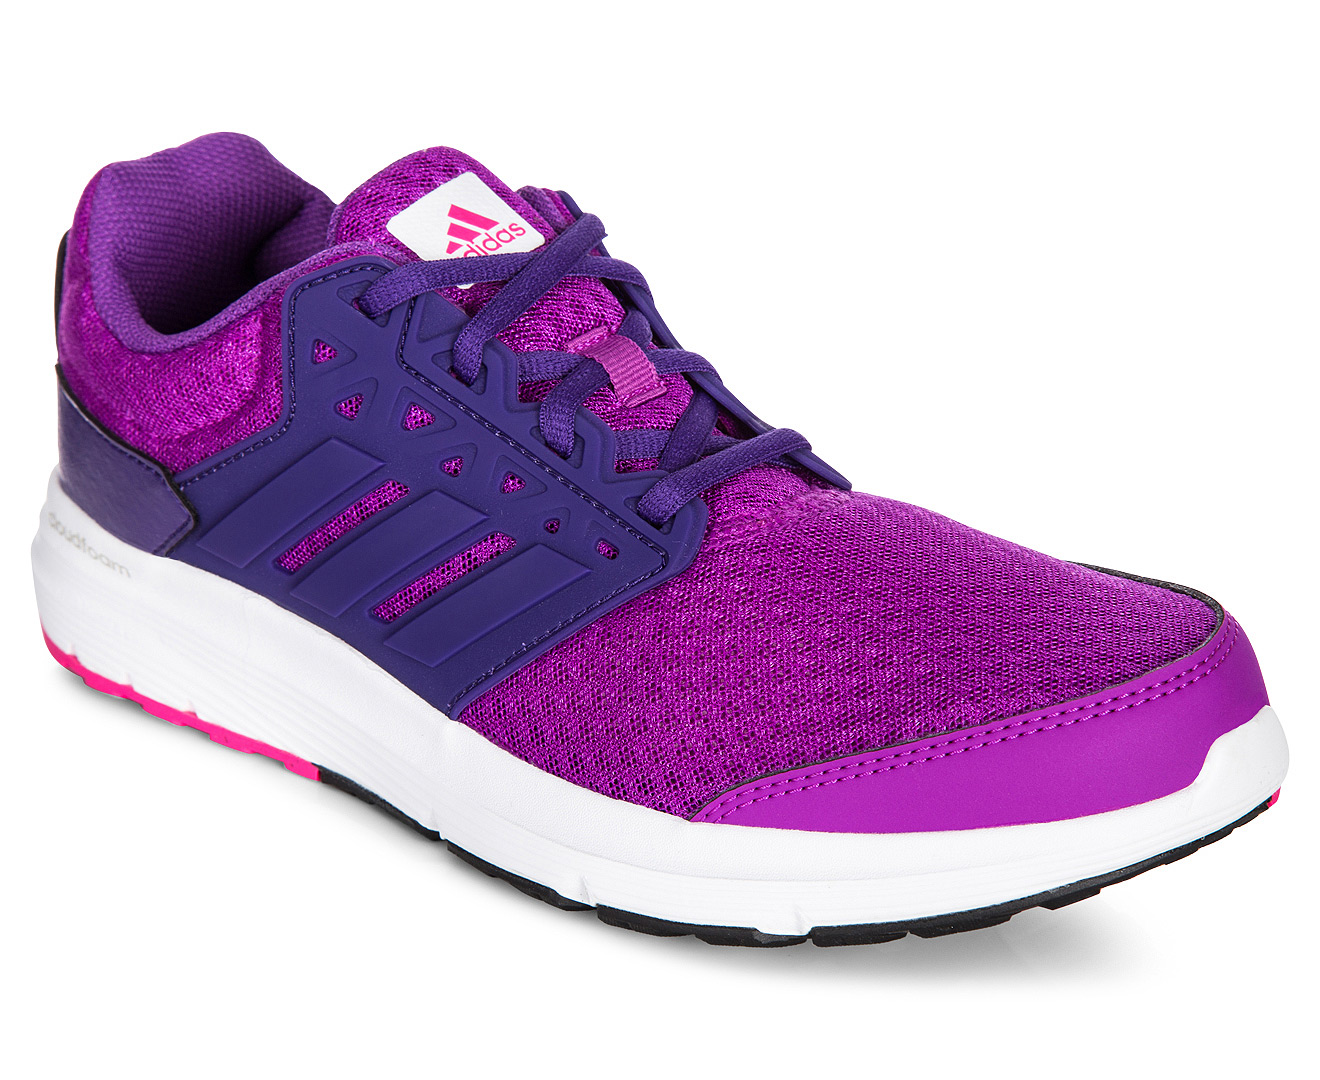 Adidas Galaxy 3 Shoe Shock Purple | Www.catch.com.au